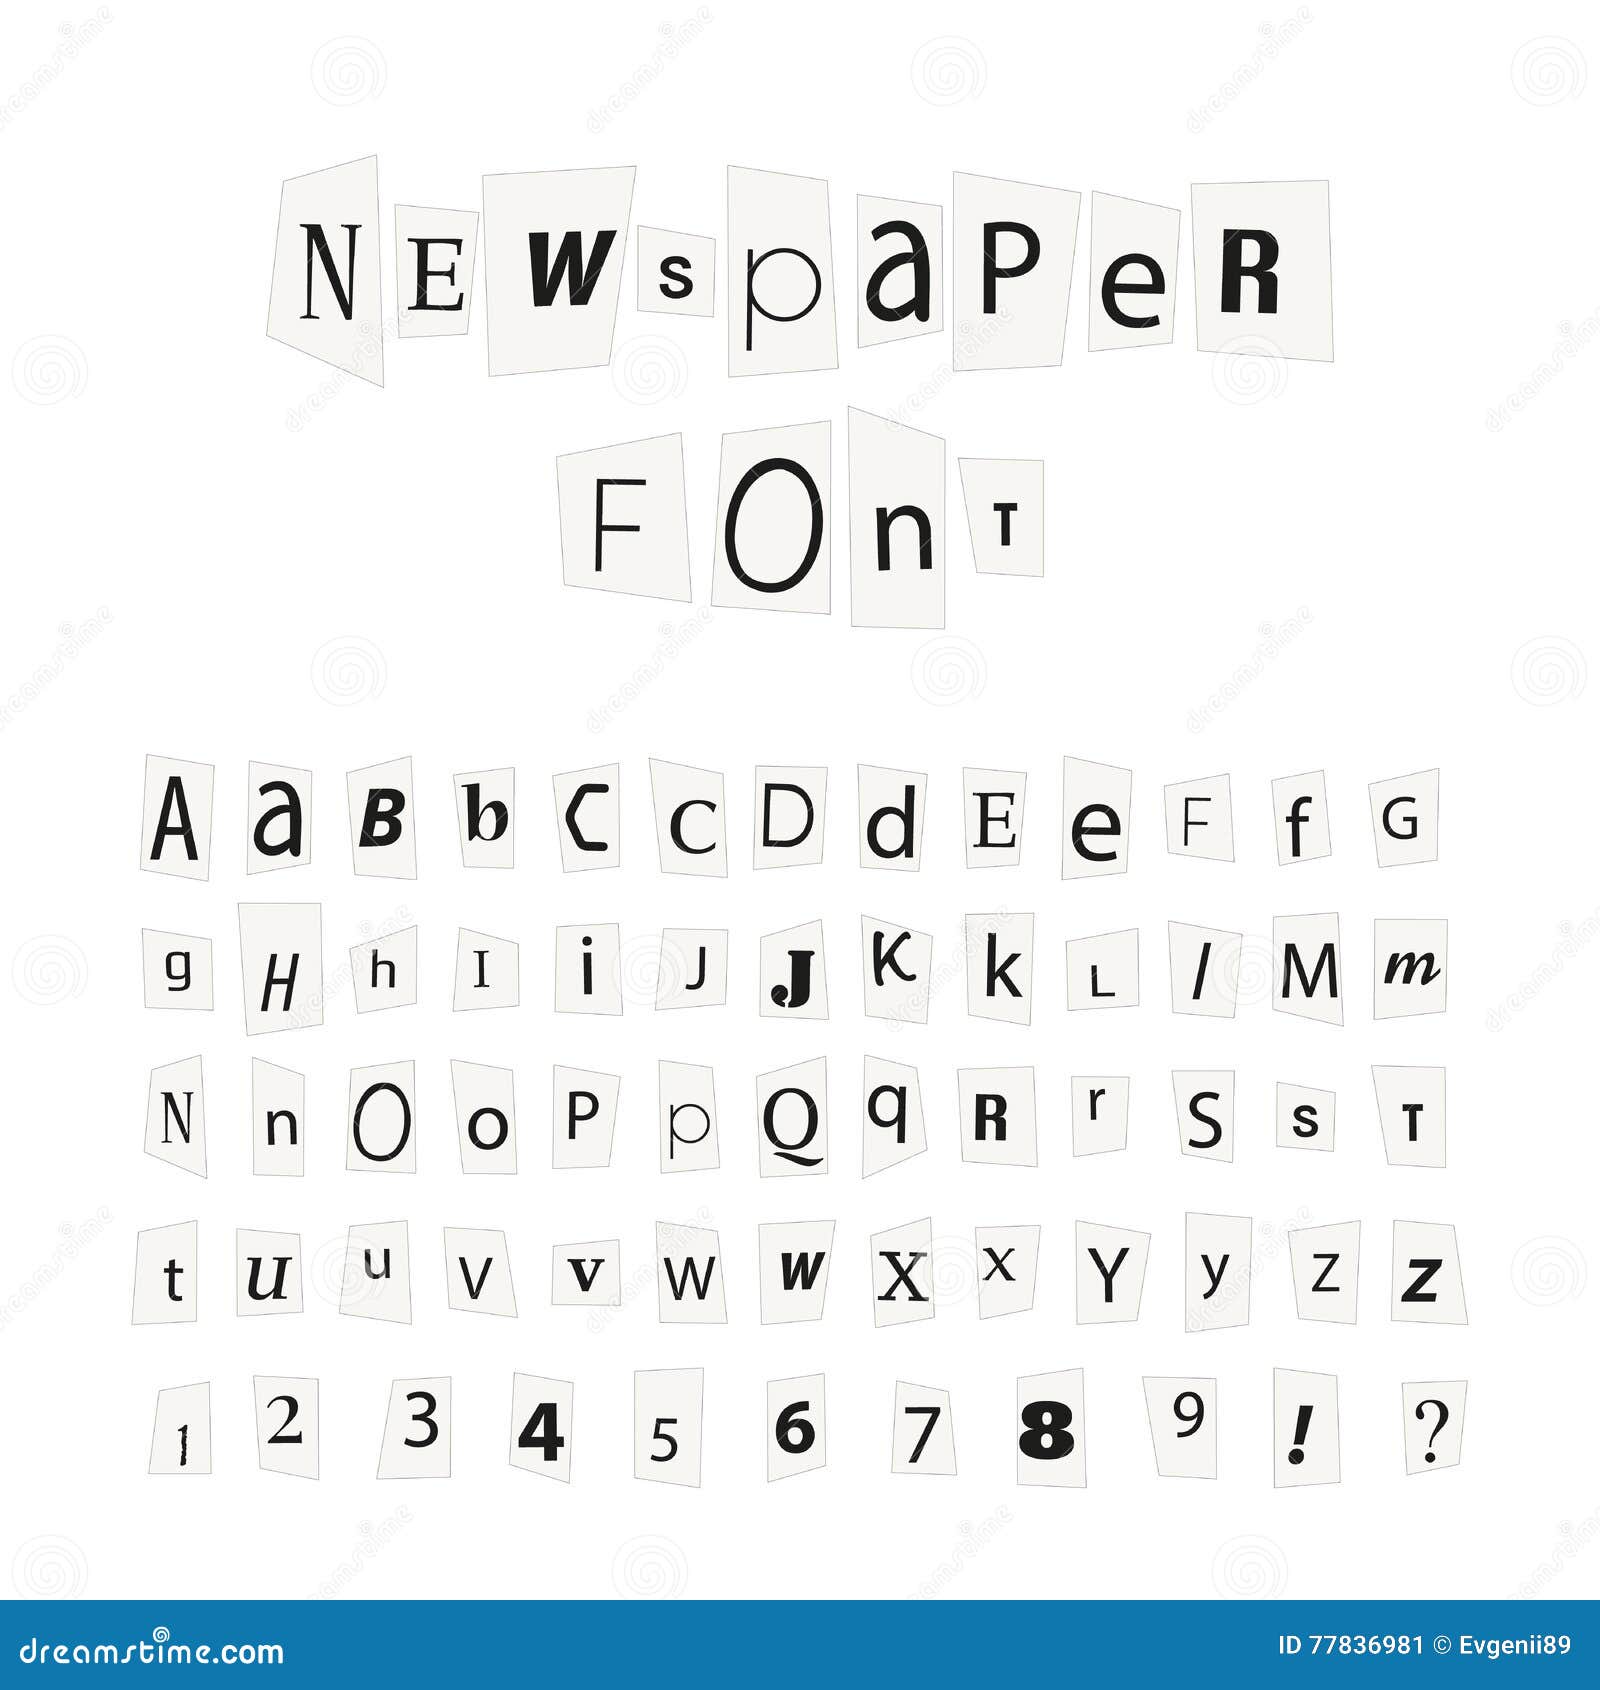 Newspaper Cutout Letters Font Stock Illustrations 179 Newspaper Cutout Letters Font Stock Illustrations Vectors Clipart Dreamstime